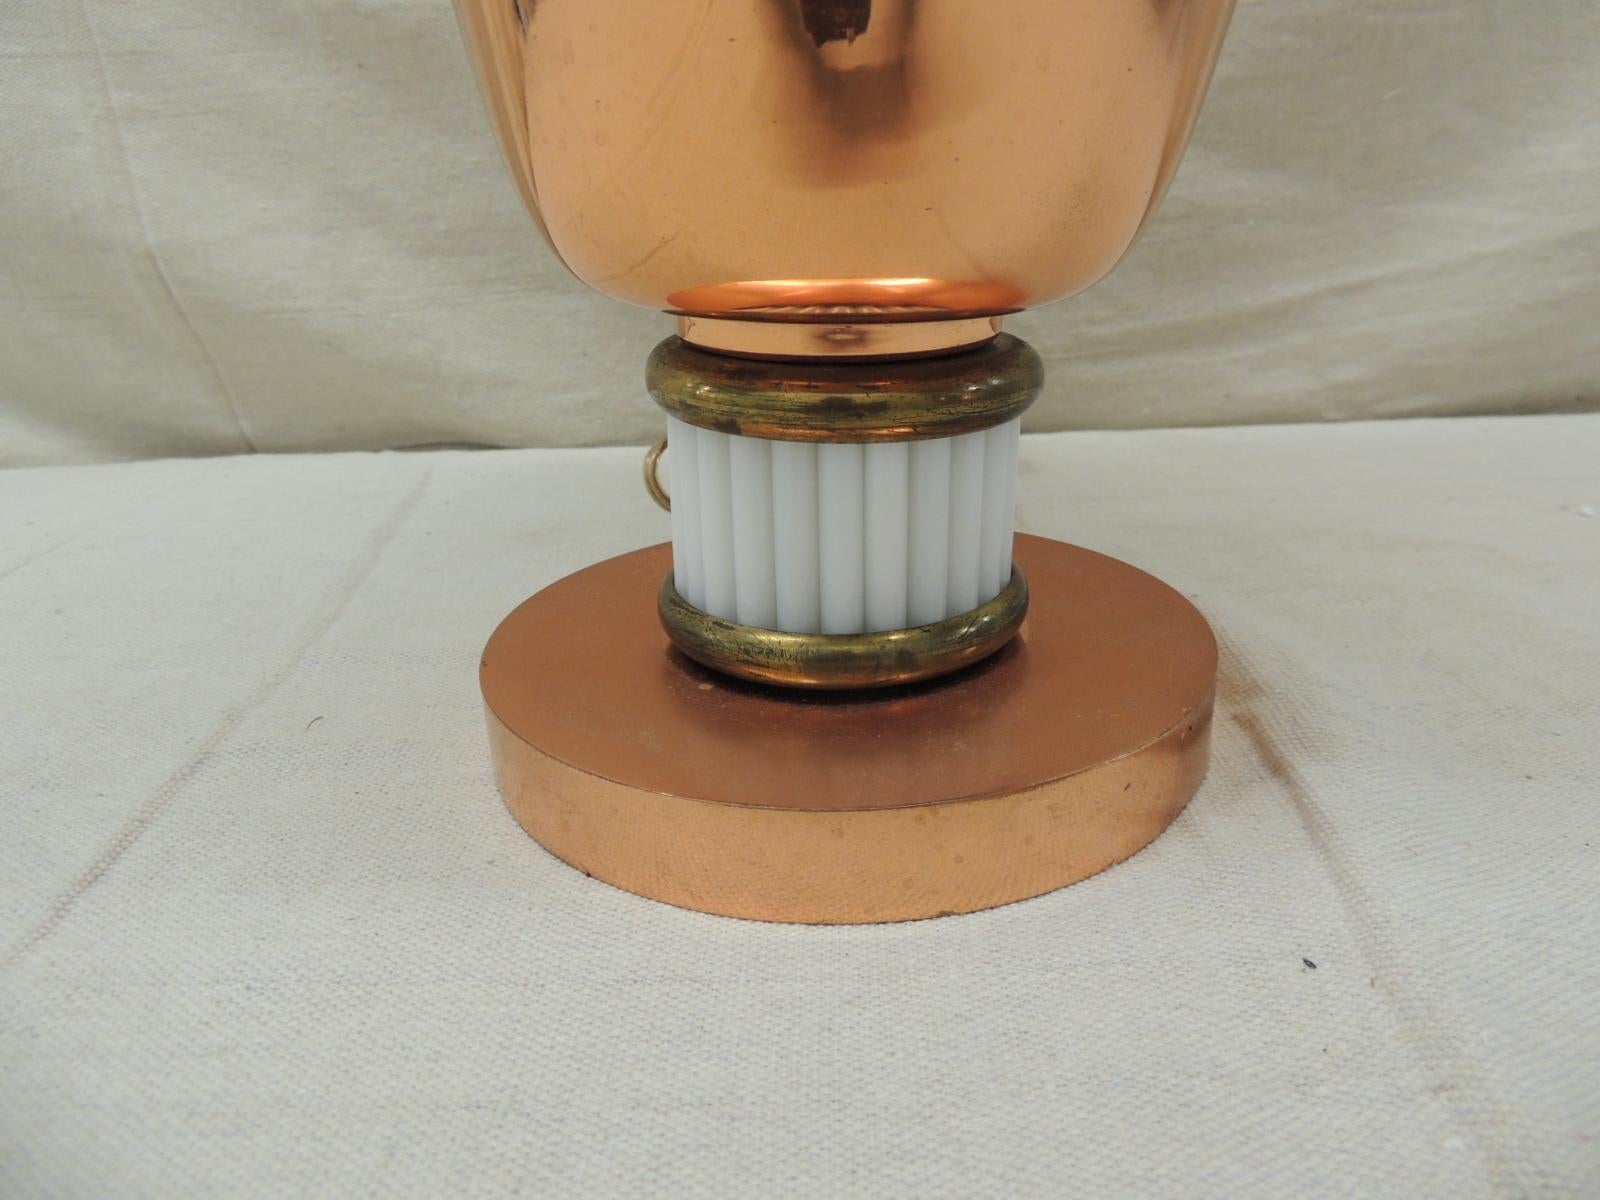 Vintage Art Deco urn shape copper finish table lamp,
Uplight.
Size: 10